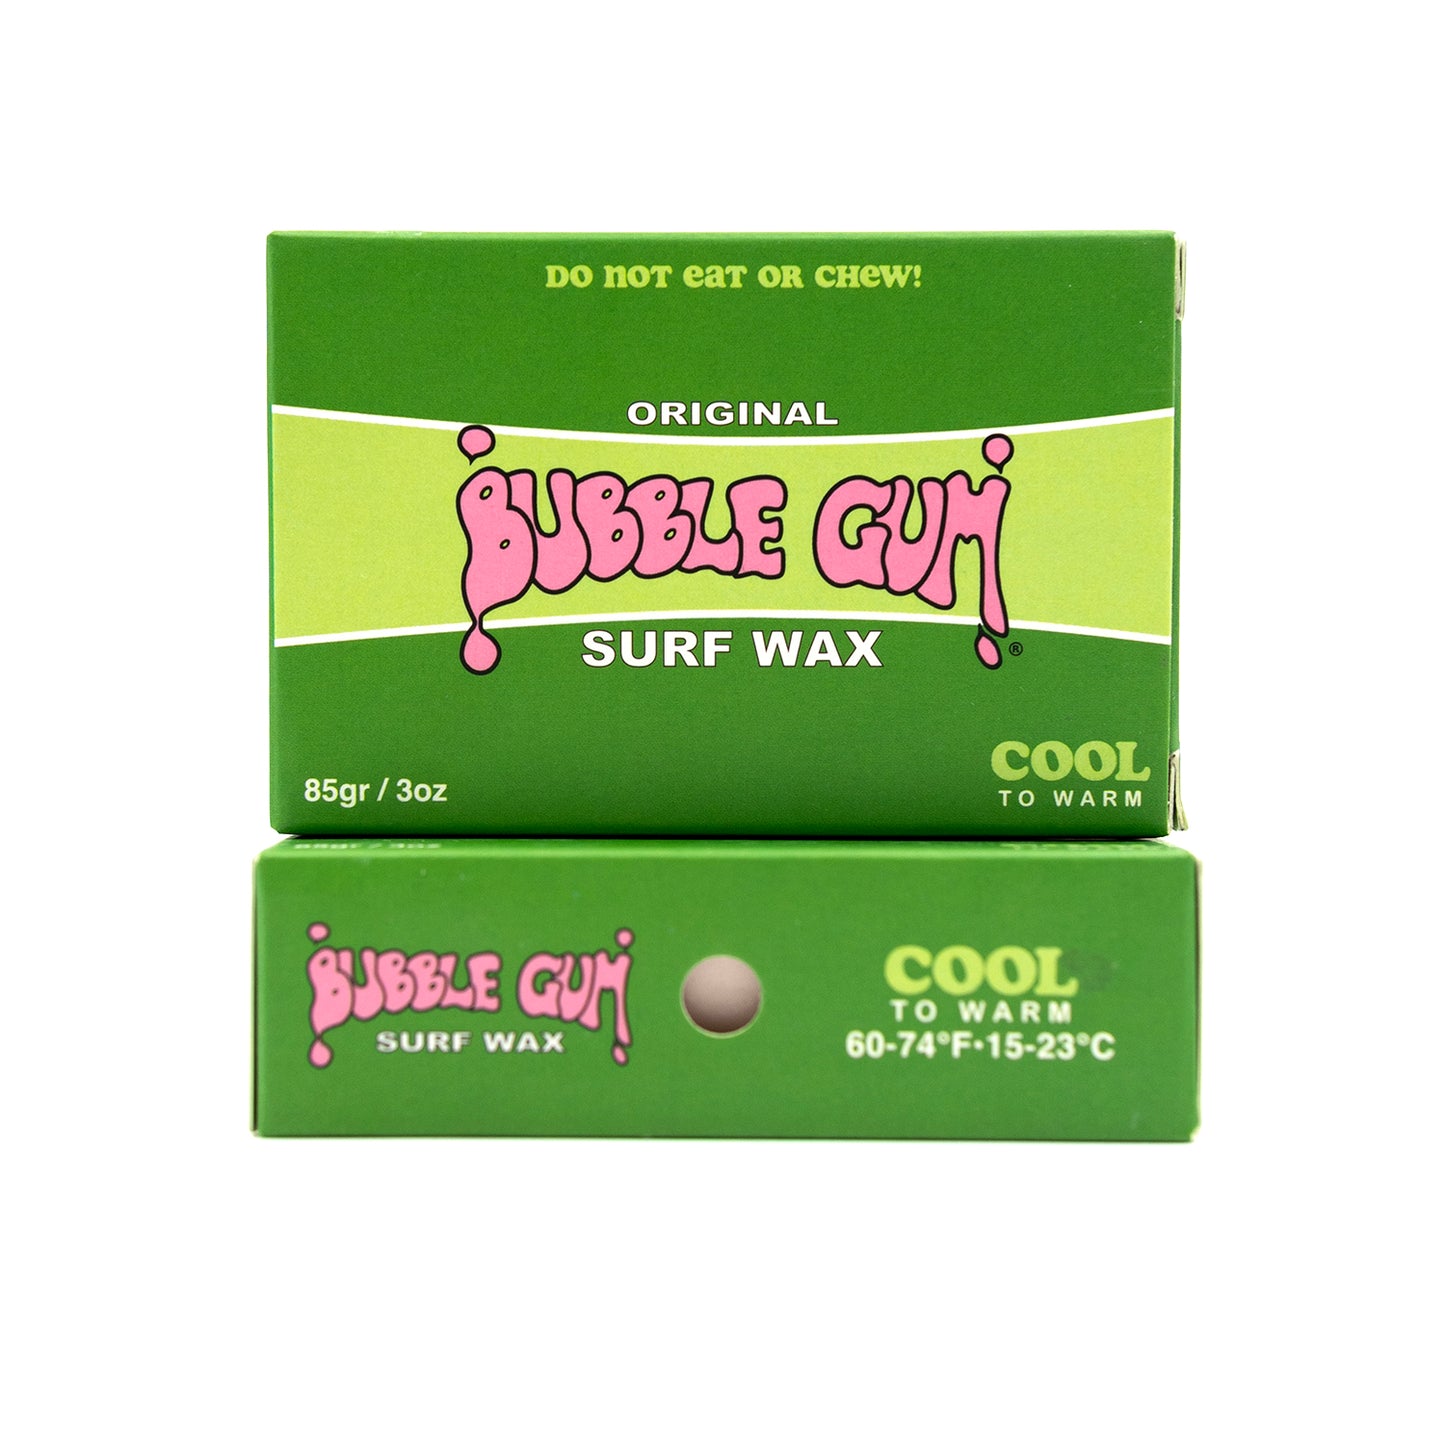 Bubble Gum "Original Formula" Surf Wax Box - Cool to Warm - 60°- 74° - 6 Pack